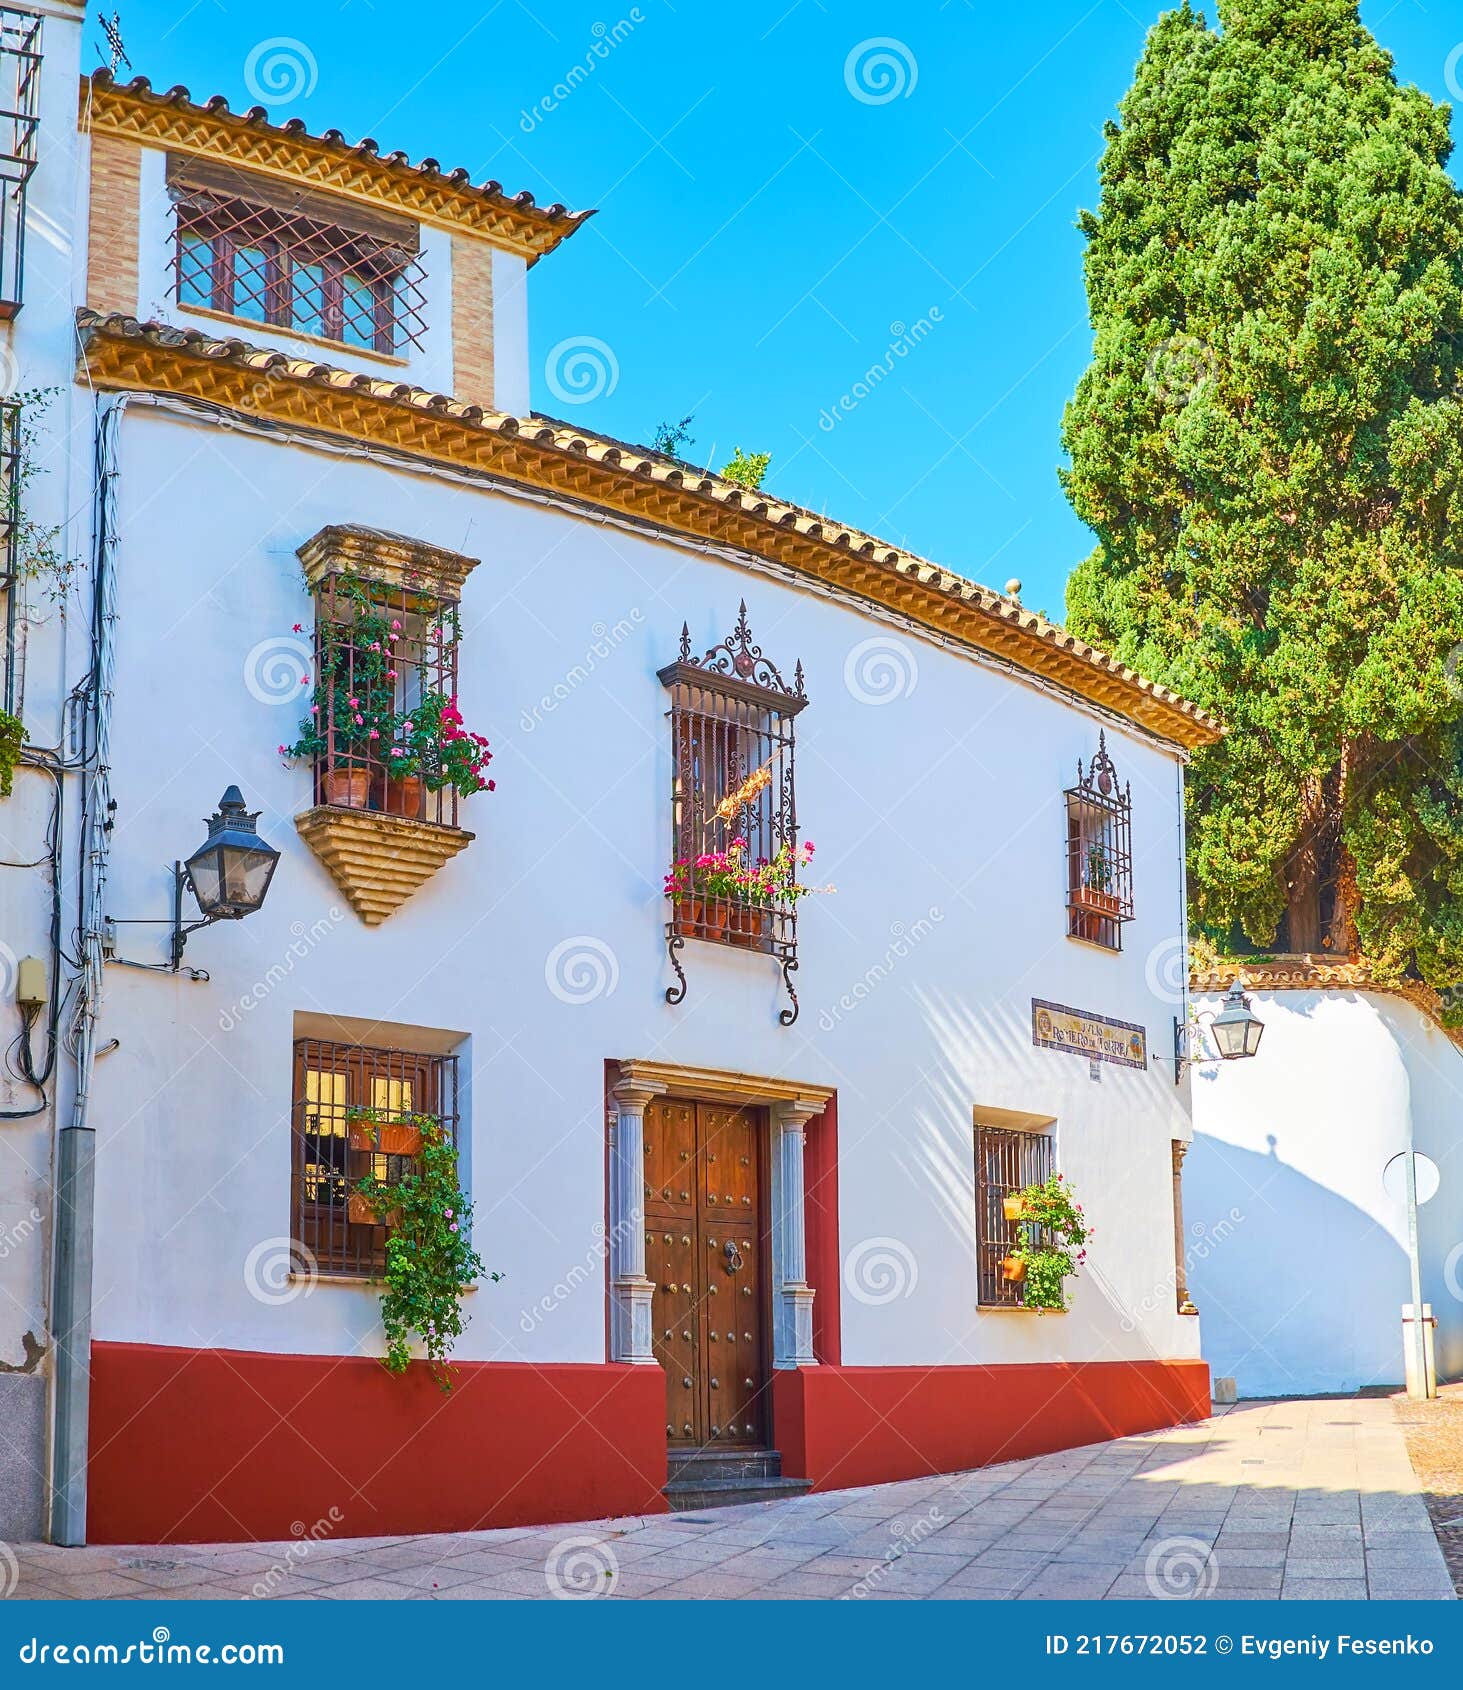 the medieval mansion in julio romero de torres street, cordoba, spain